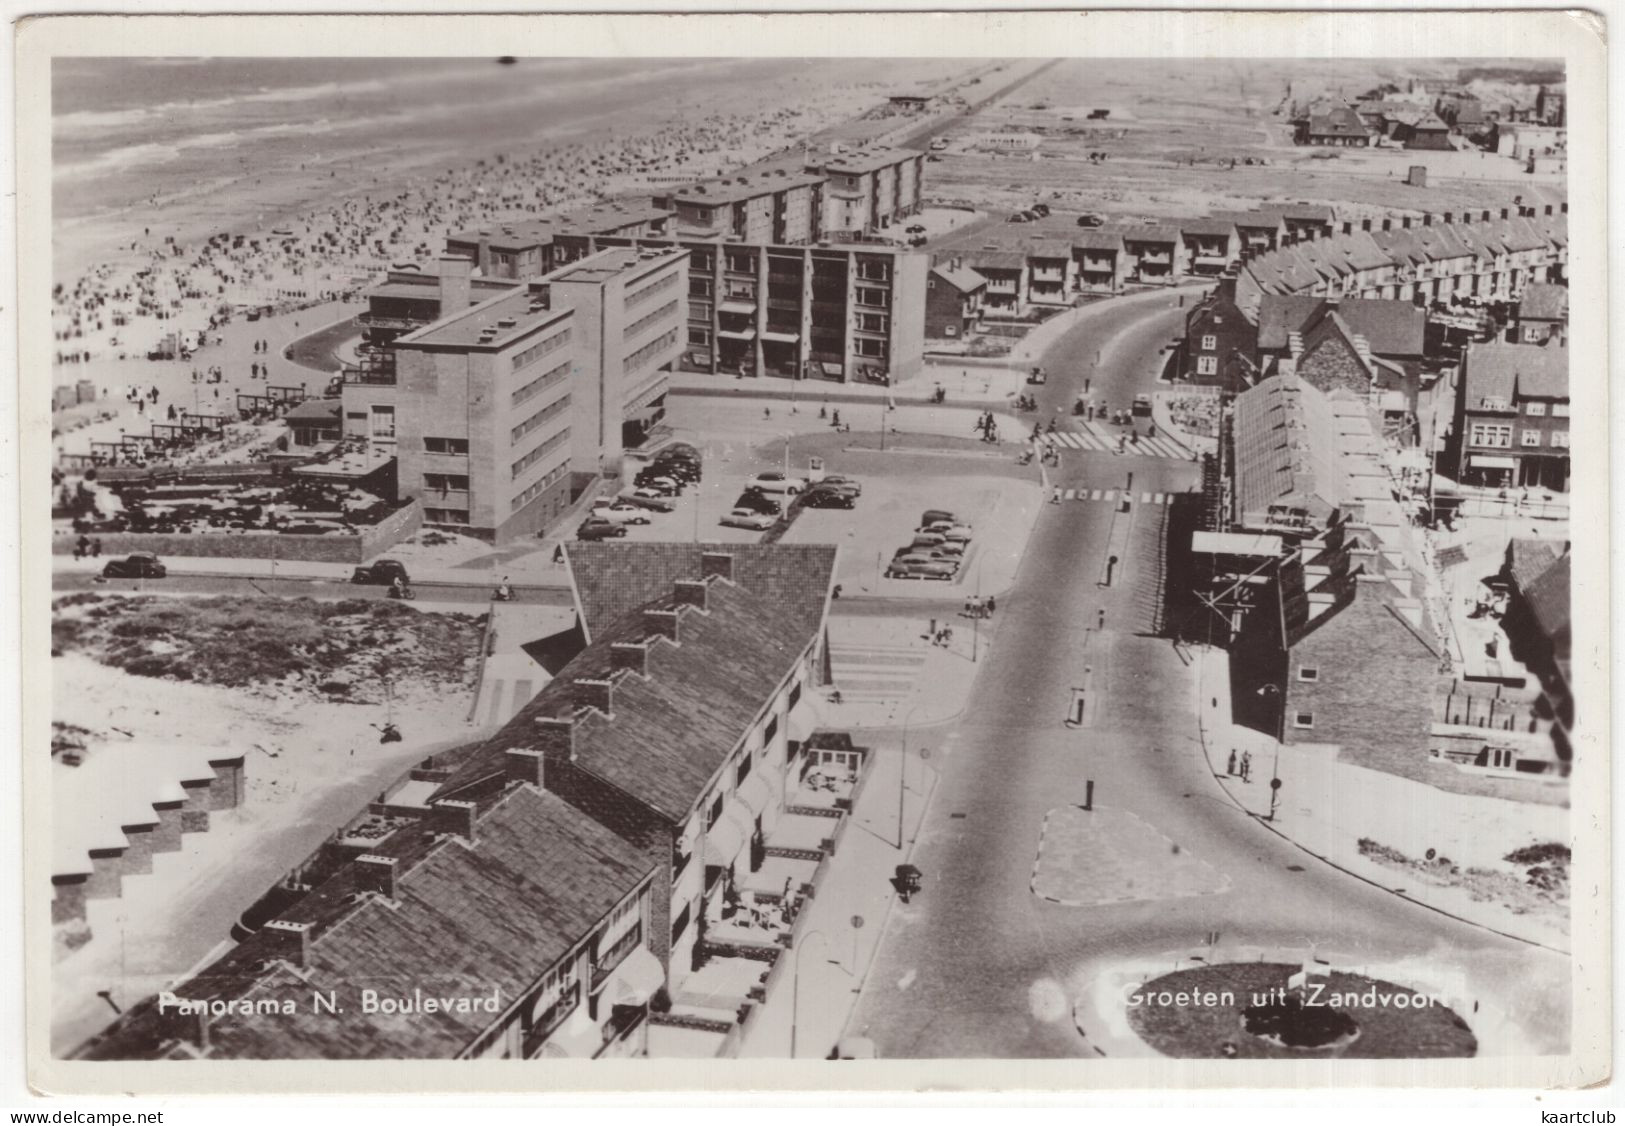 Groeten Uit Zandvoort: OLDTIMER AUTO'S / CARS 1950-1960's - Panorama N. Boulevard - (Holland) - Toerisme